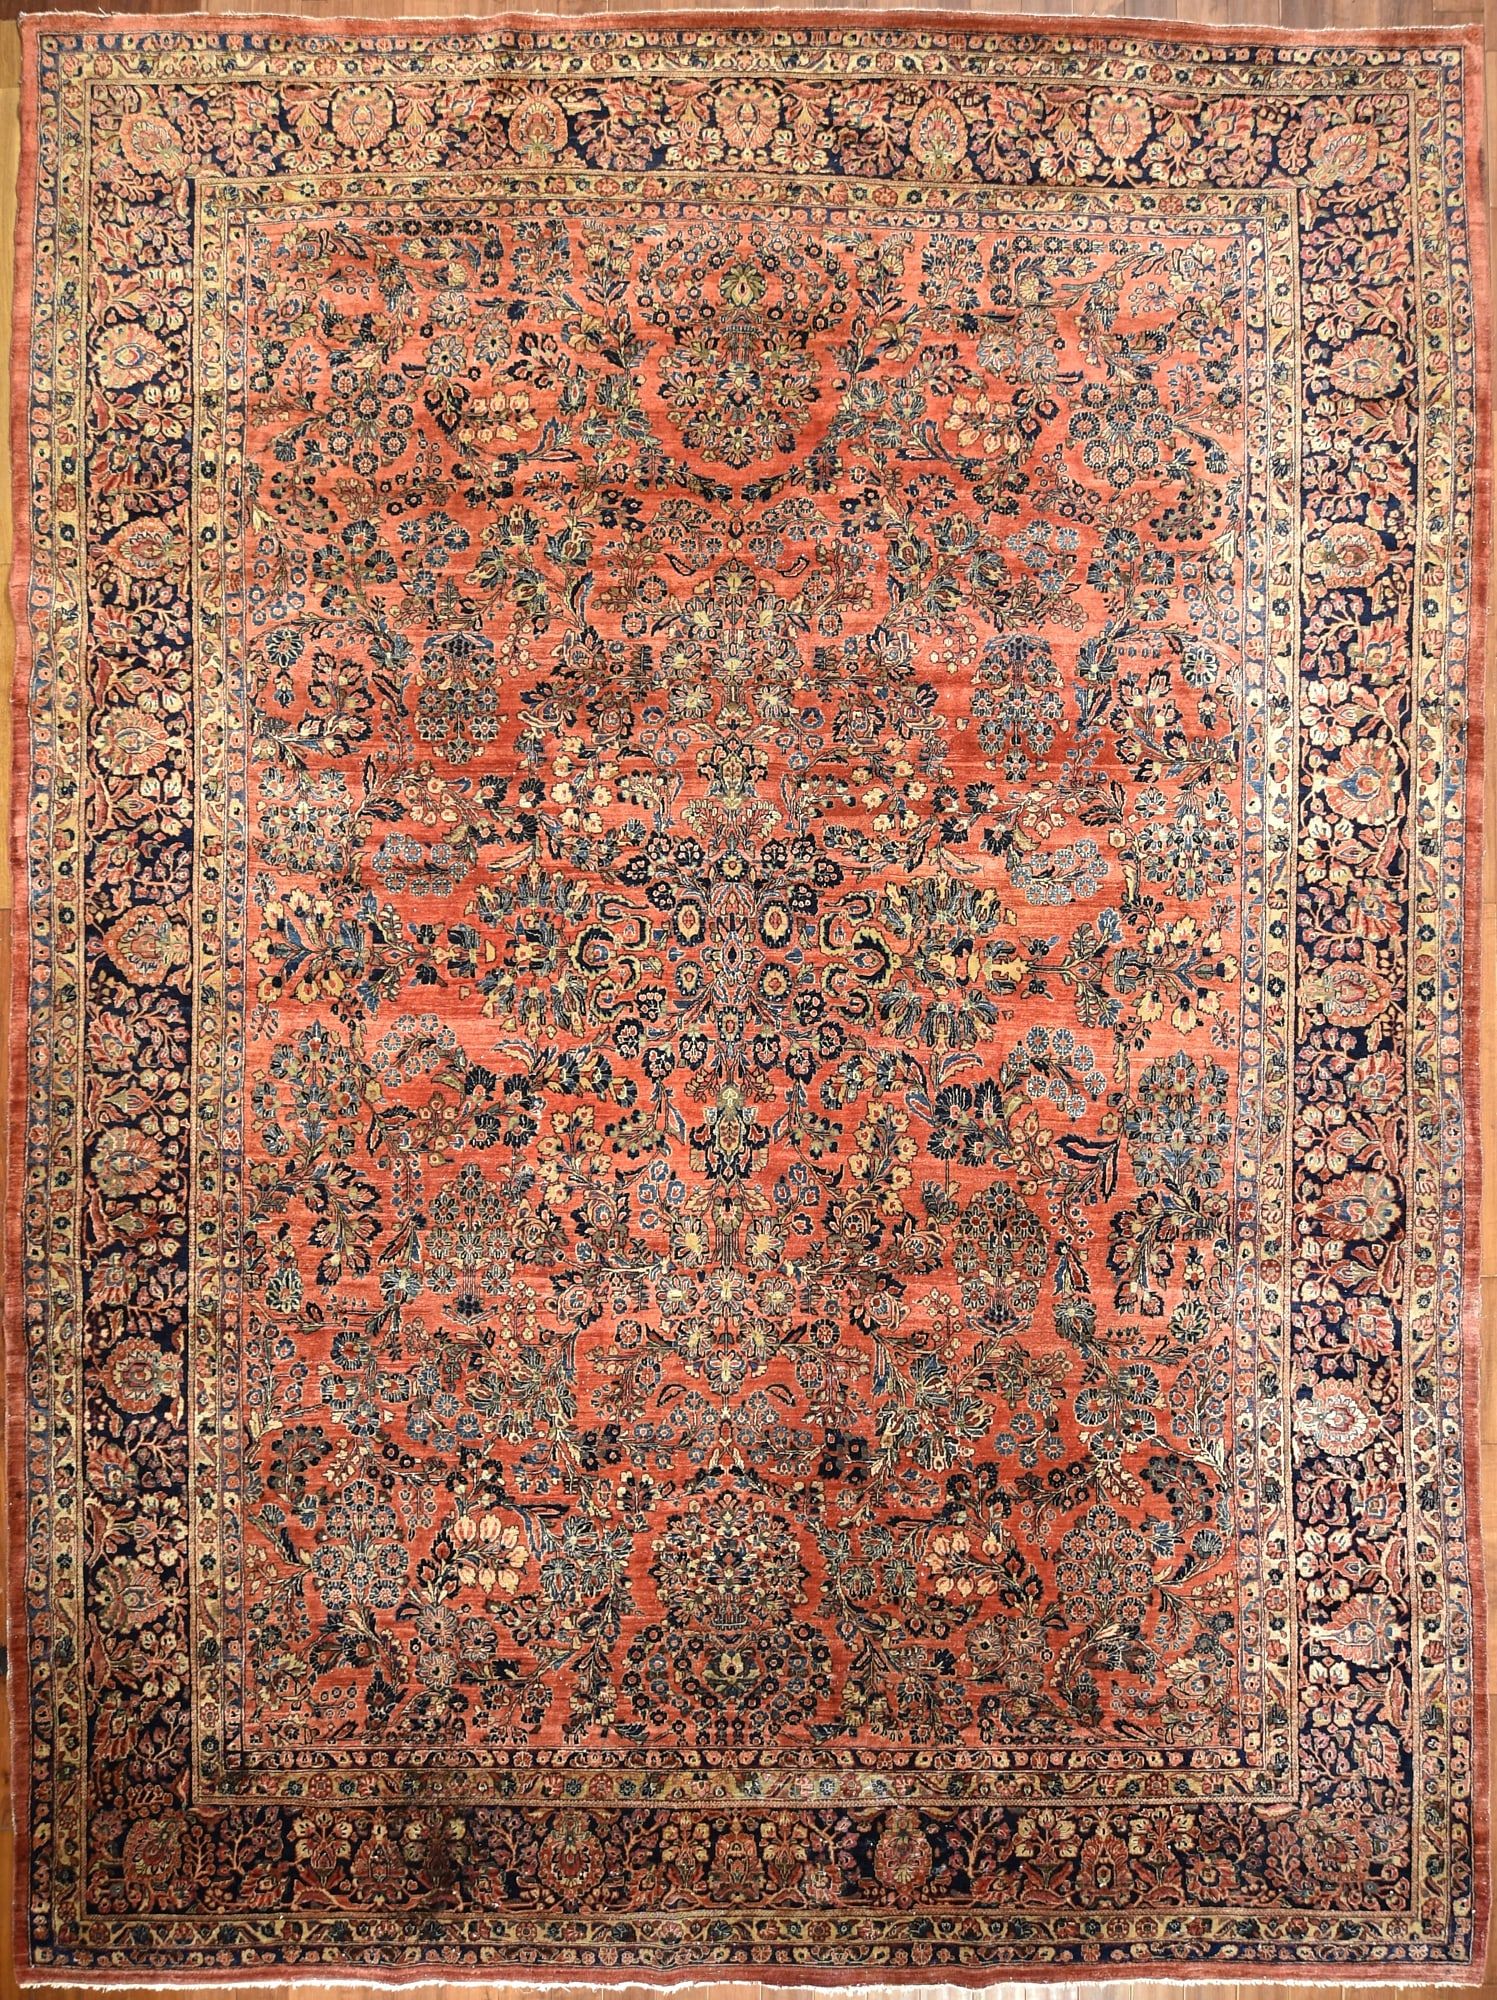 A SAROUK CARPETA Sarouk carpetdimensions 2fb3370